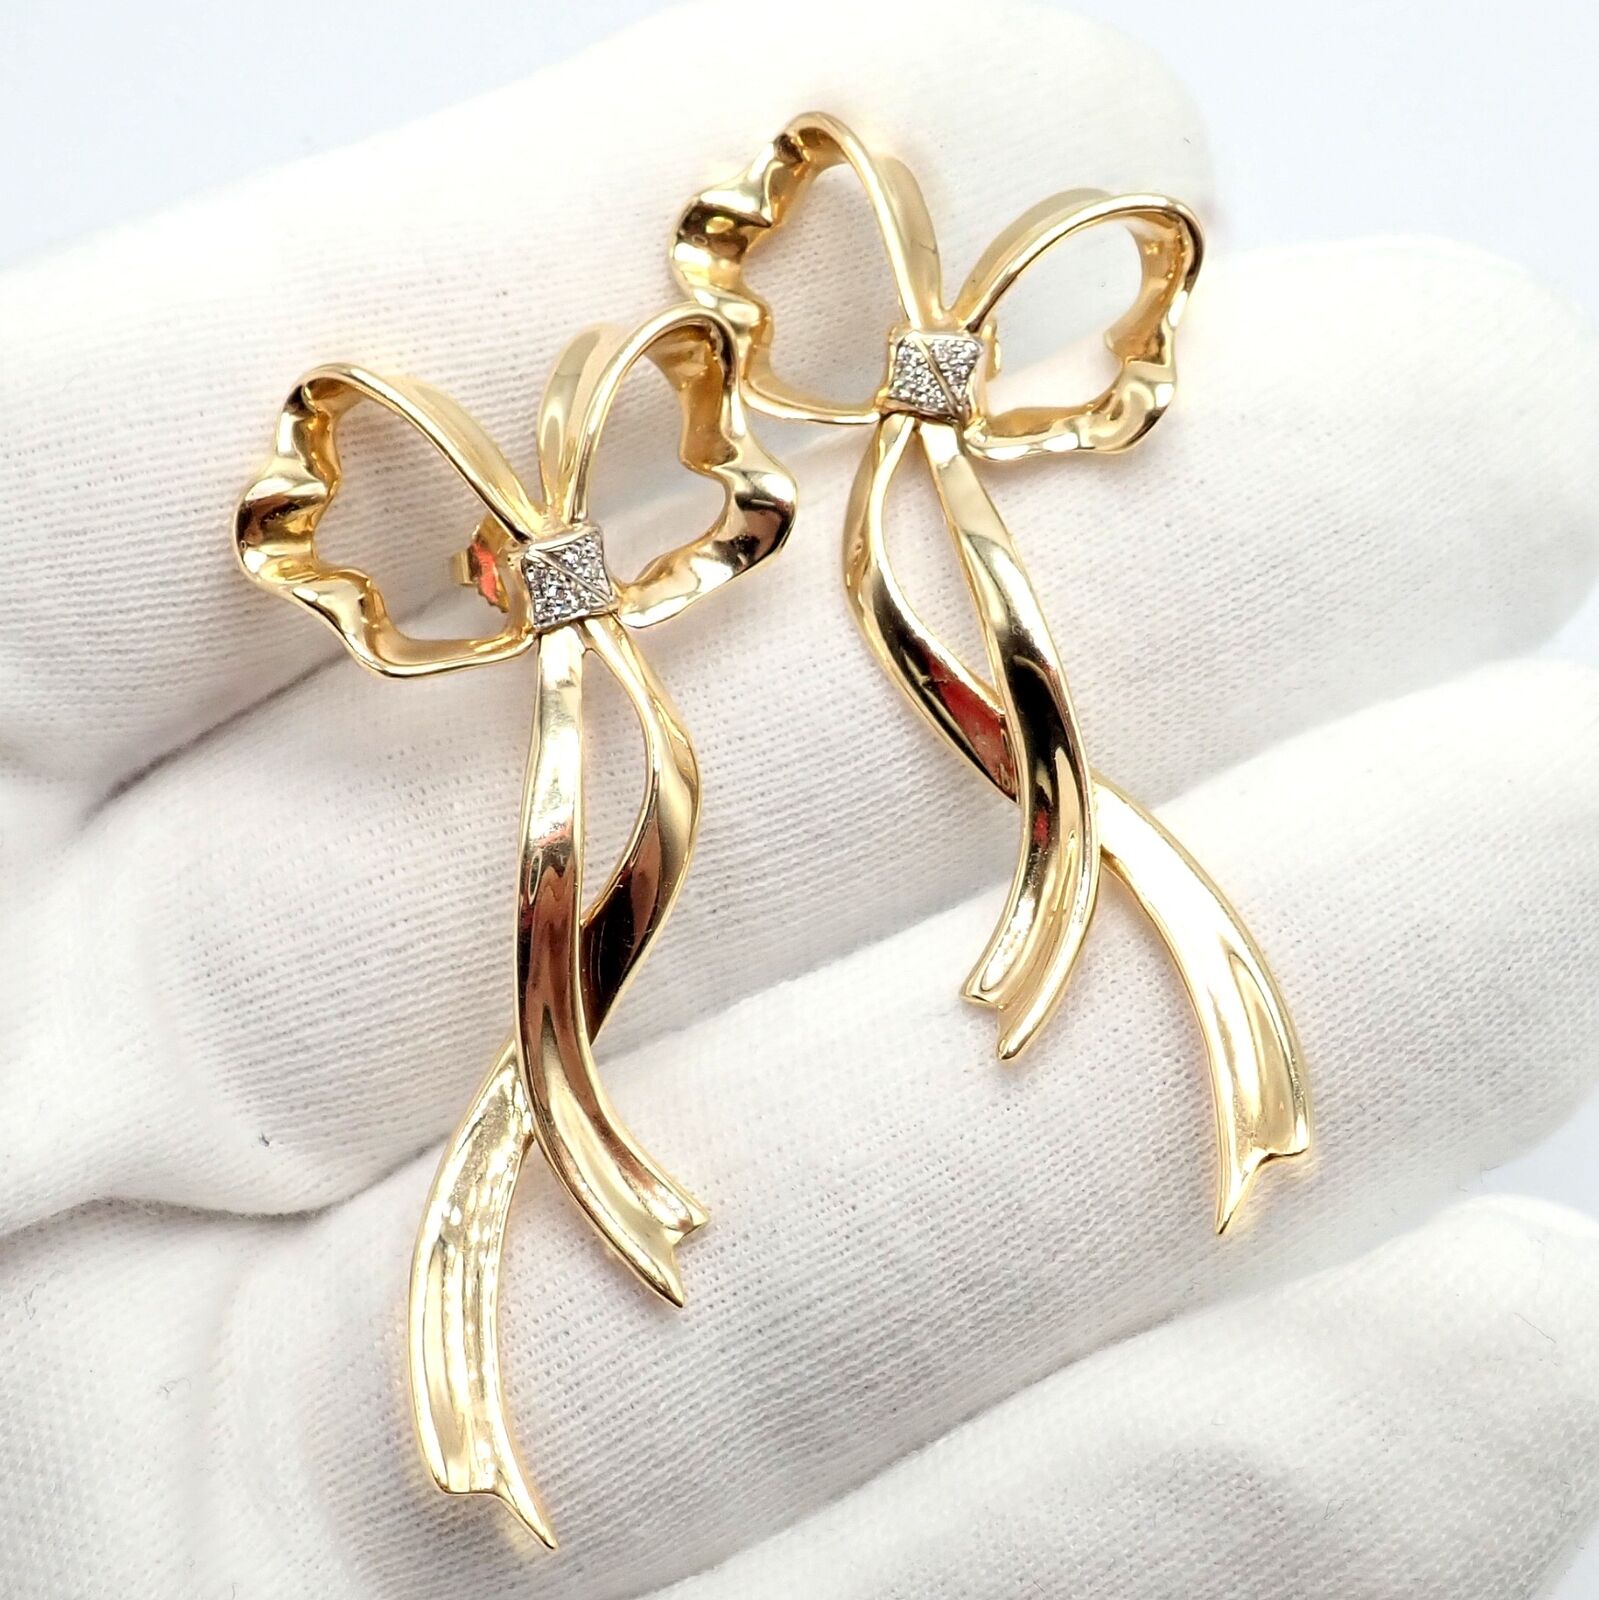 Tiffany & Co Silver Knotted Bow Ribbon Earrings | eBay